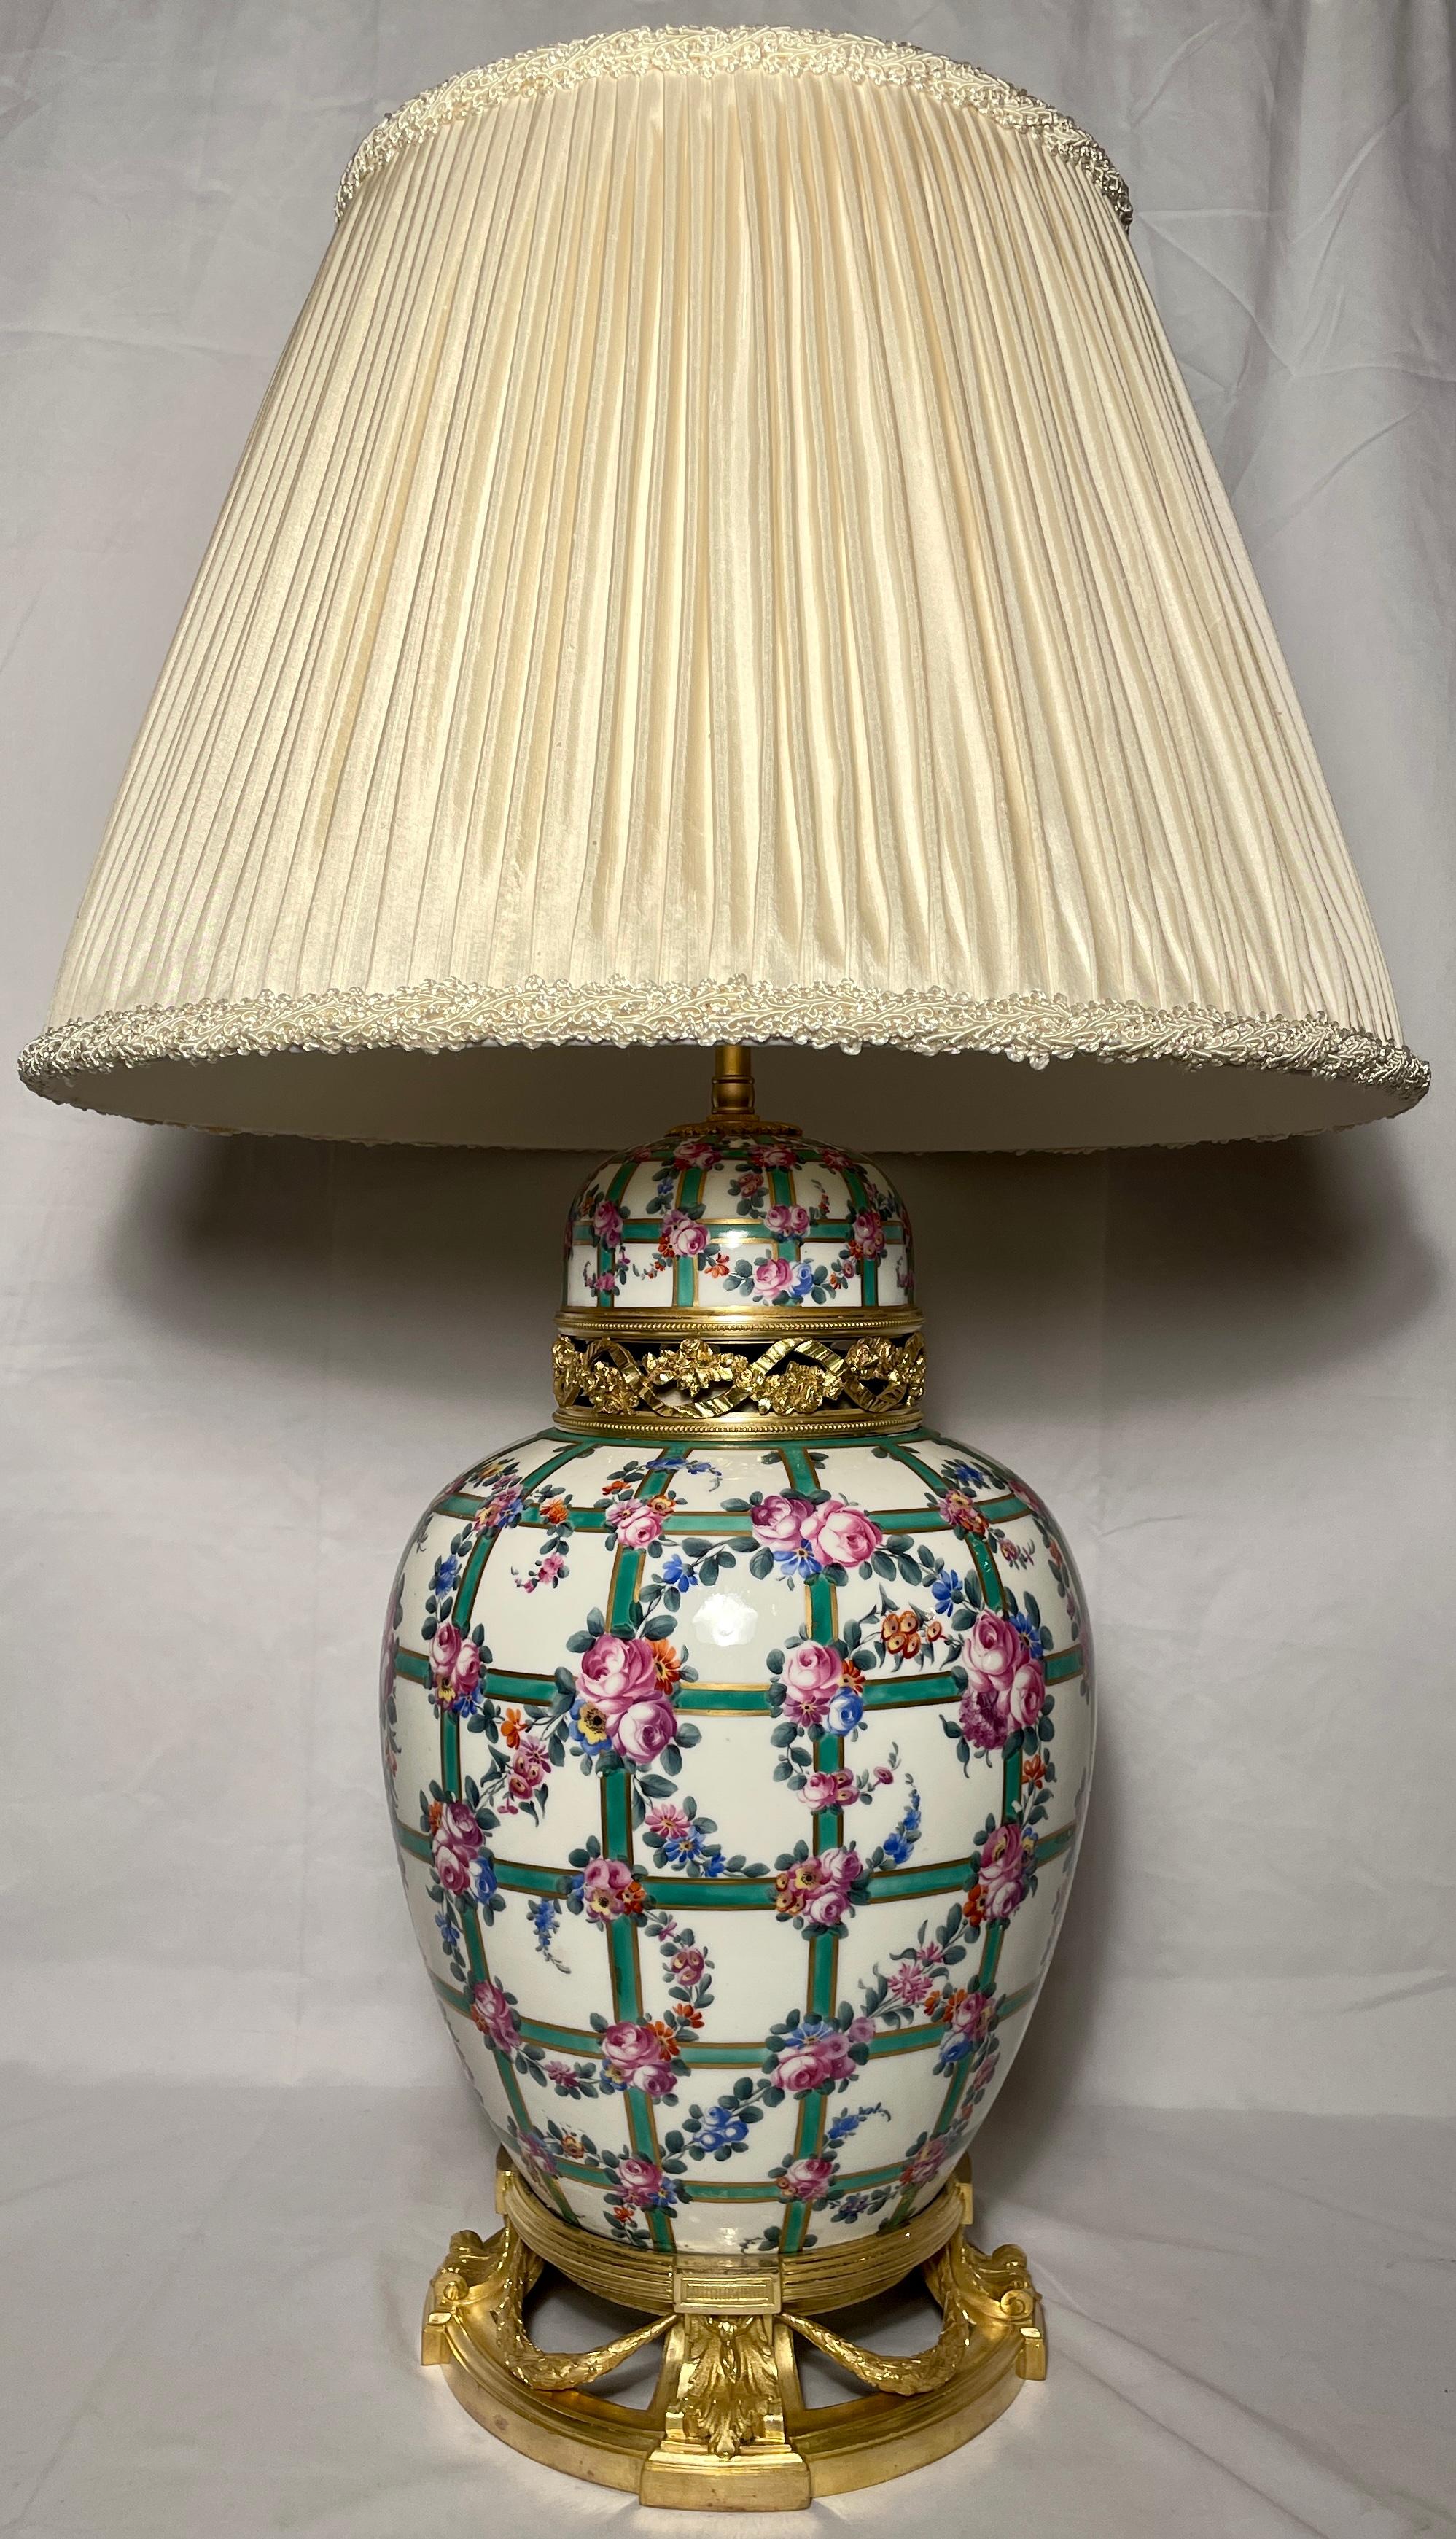 Pair antique French Belle Epoque porcelain and ormolu lamps, circa 1880.